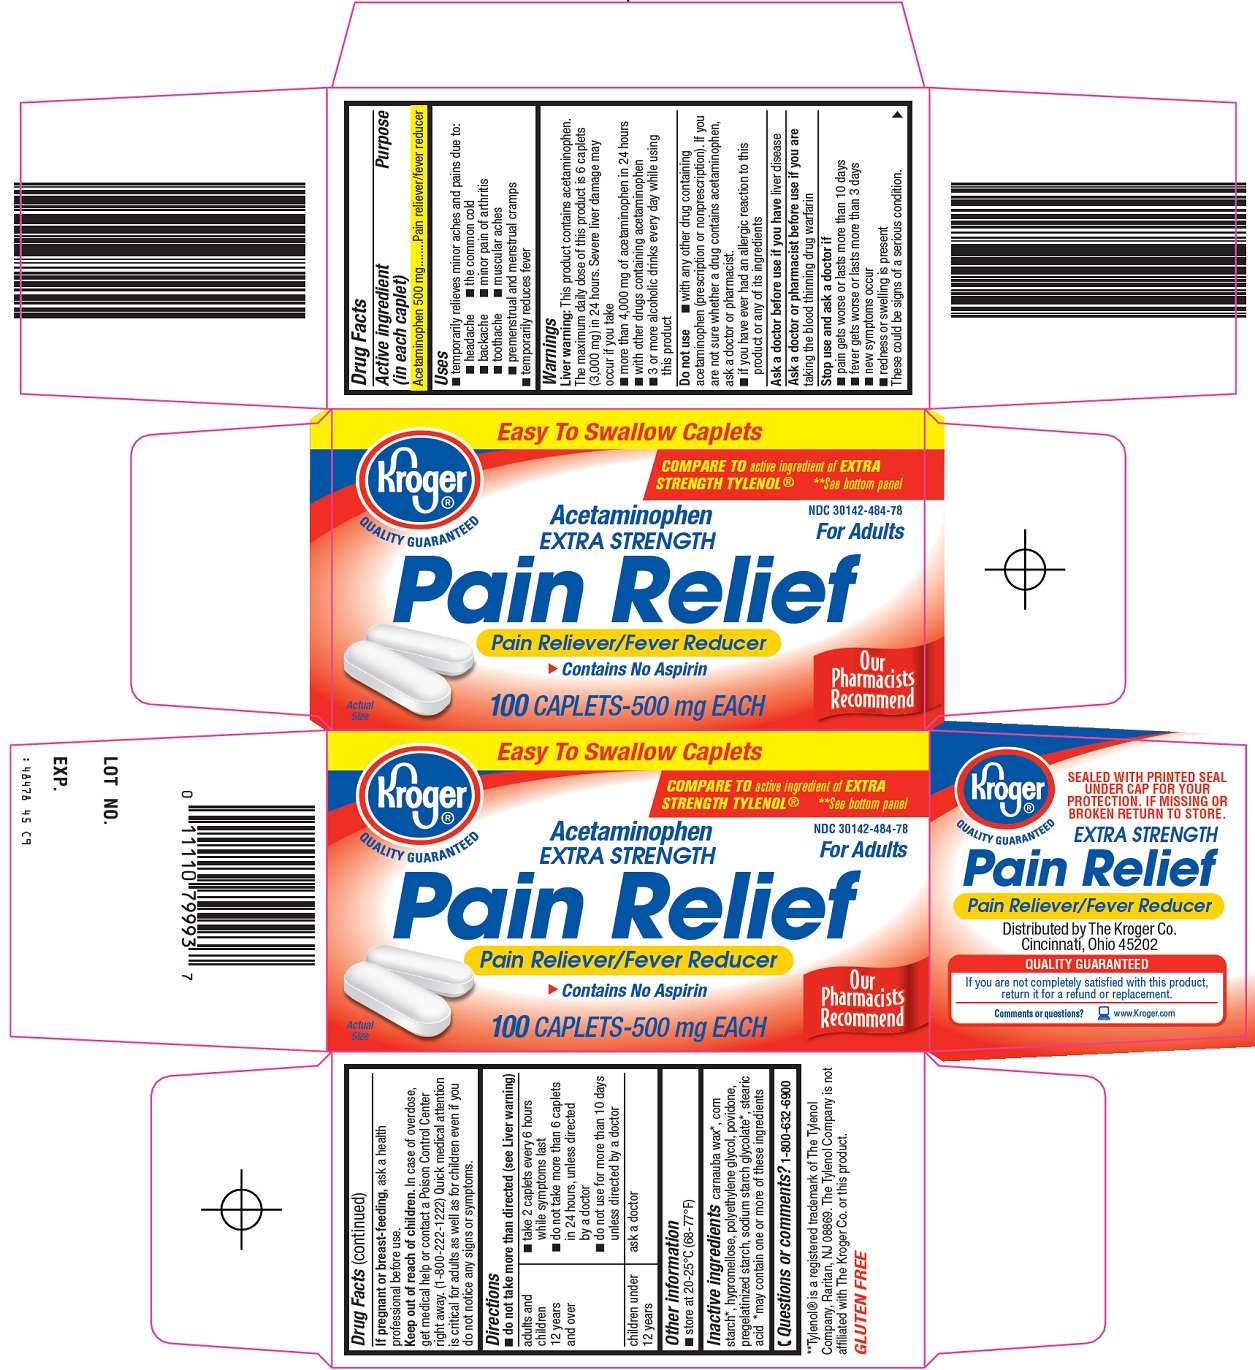 Pain Relief Carton Image